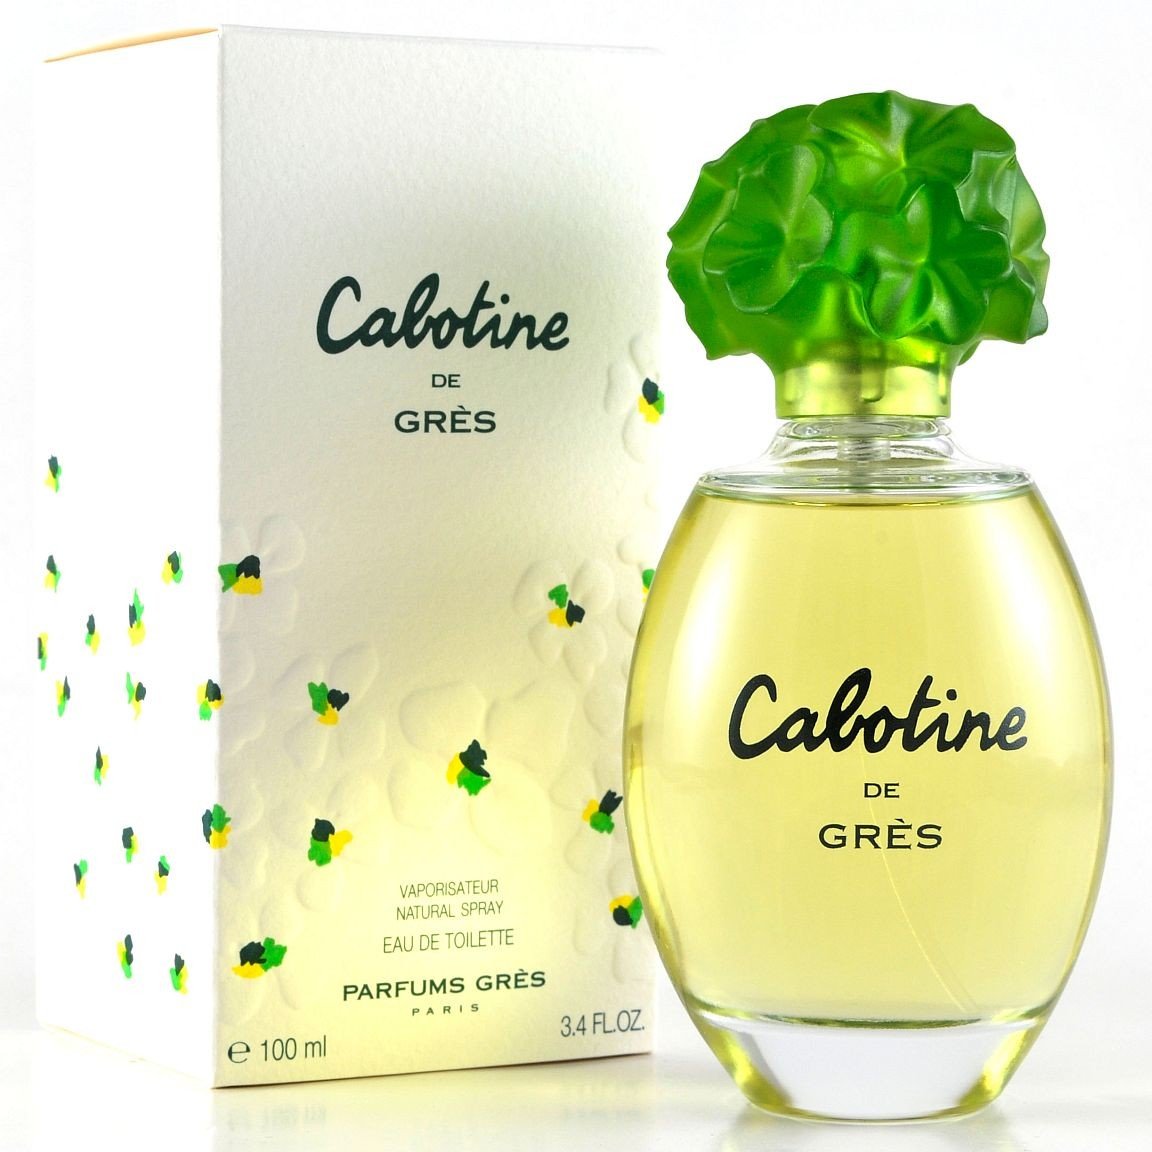 Cabotine De Gres Perfume - 100 ml - בושם לאישה קבוטין ✔מוצר מקורי